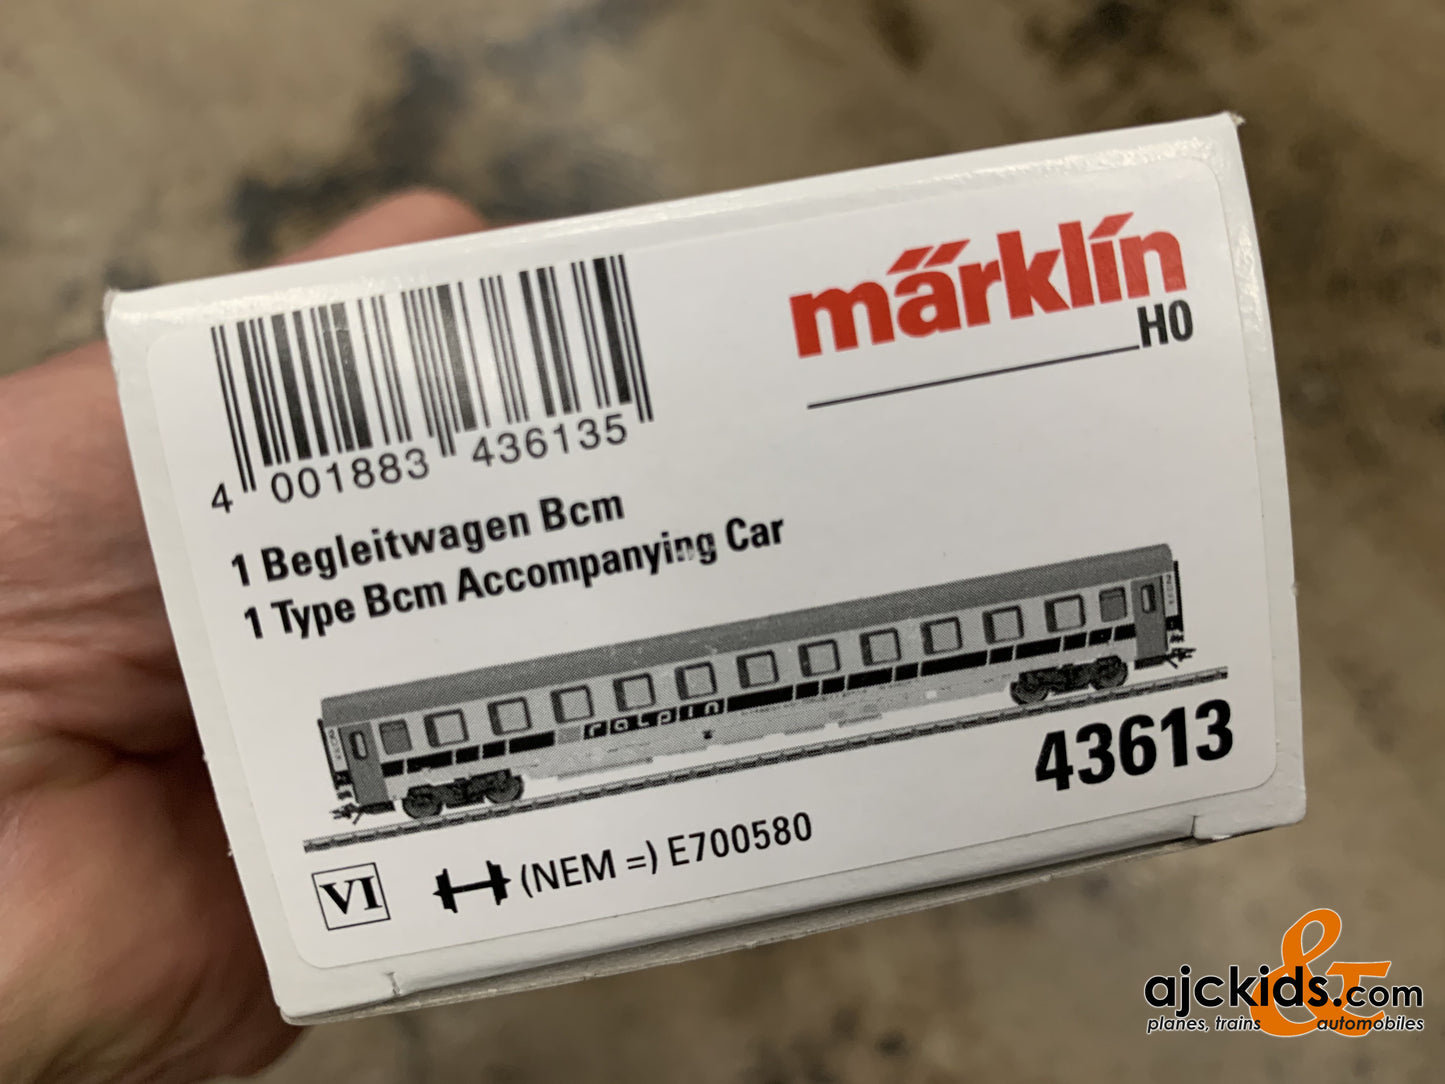 Marklin 43613 - Type Bcm Accompanying Car Ralpin